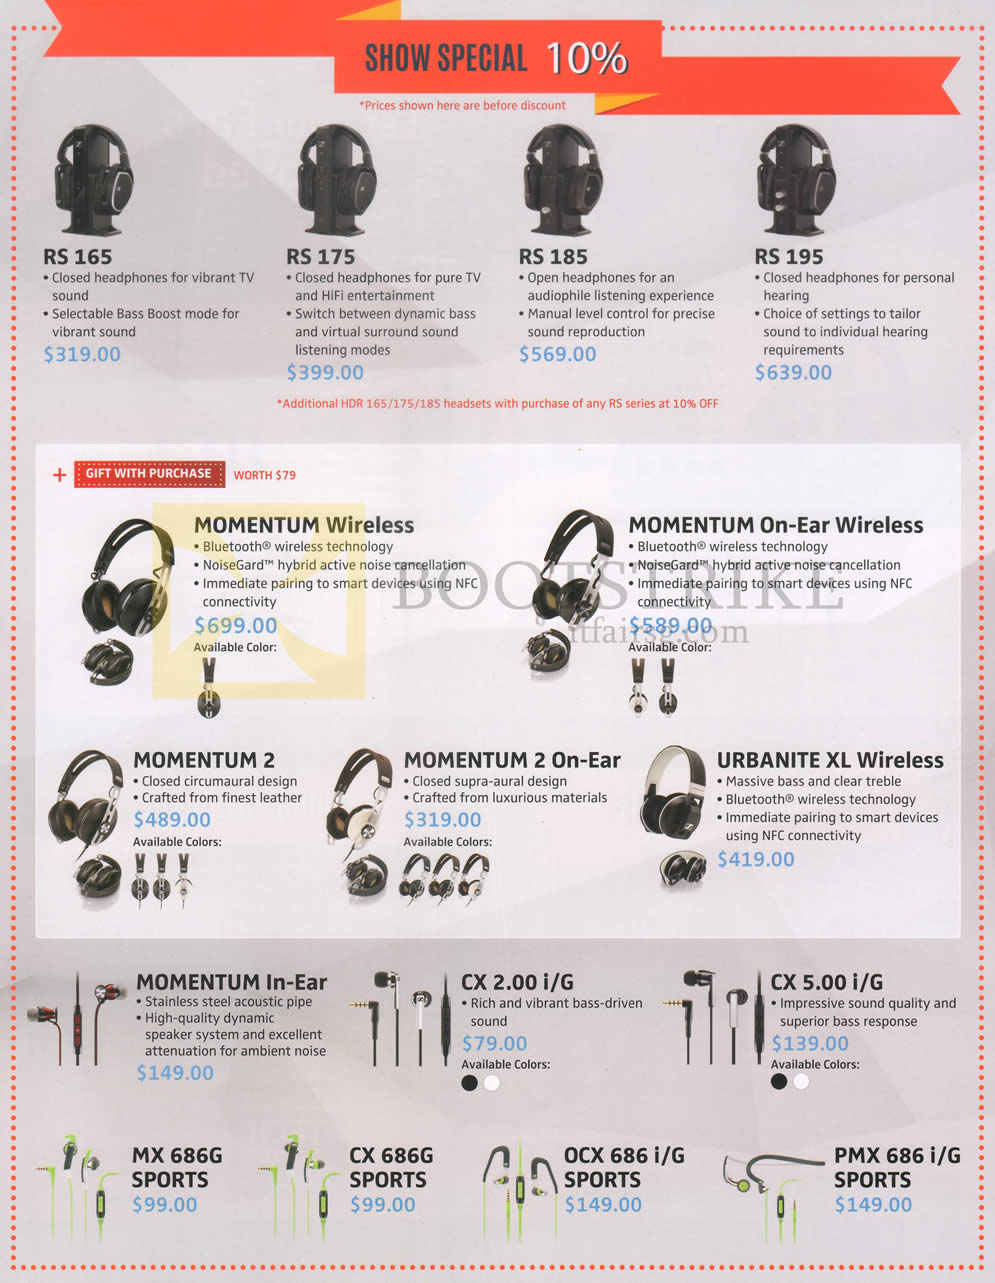 COMEX 2016 price list image brochure of Sennheiser Headphones, Earphones, RS 165, 175, 185, 195, Momentum, On-Ear, 2, 2 On-Ear, Urbanite XL Wireless, Momentum In-Ear, CX 2.00 I, Cx 5.00 I, MX686G, 686, PMX 686 Sports